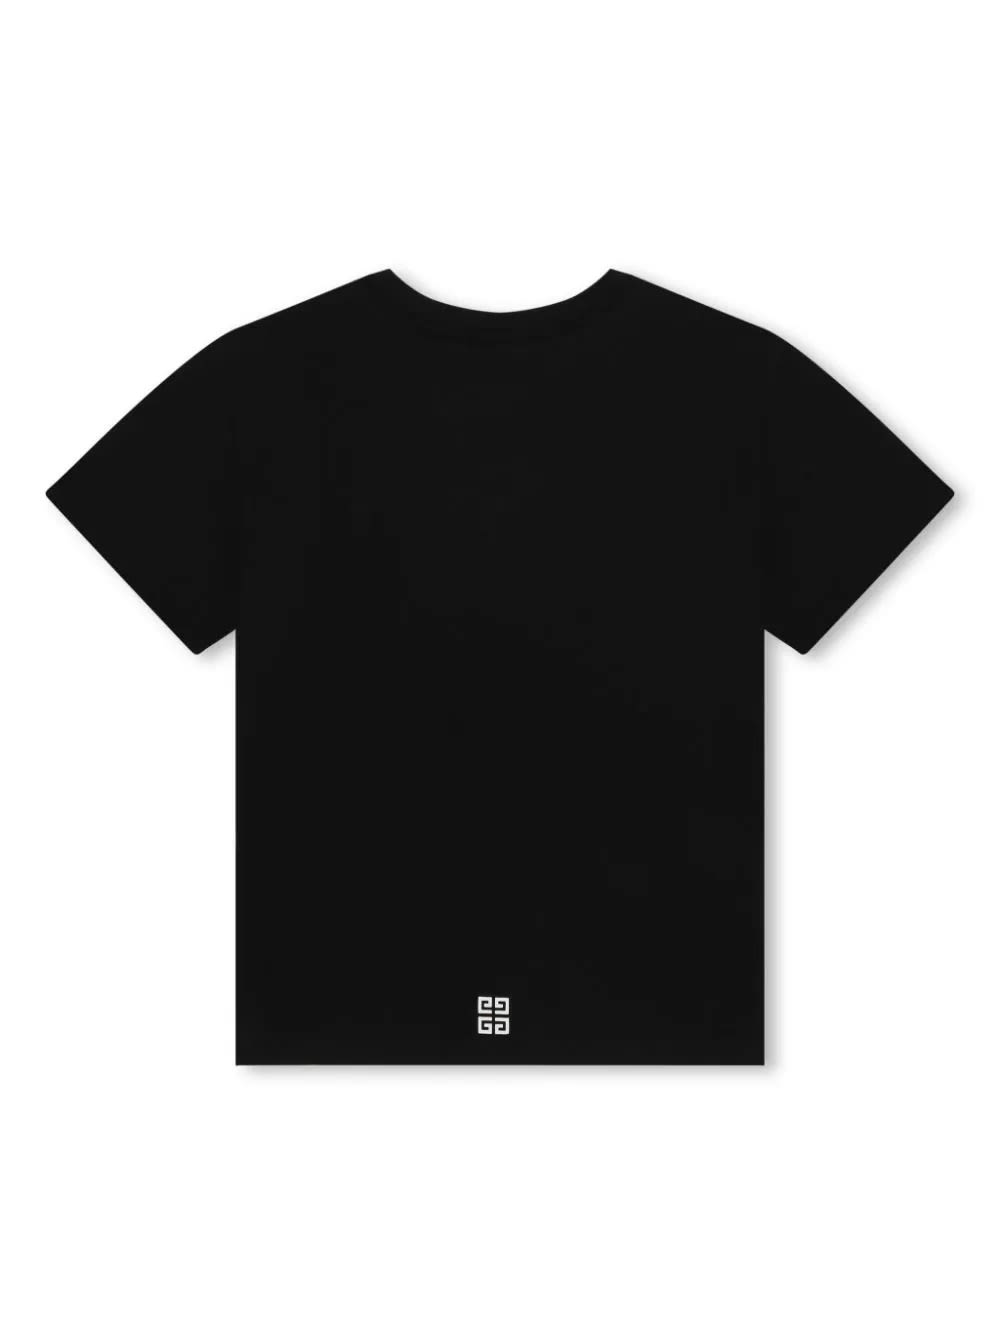 Shop Givenchy Black  4g T-shirt